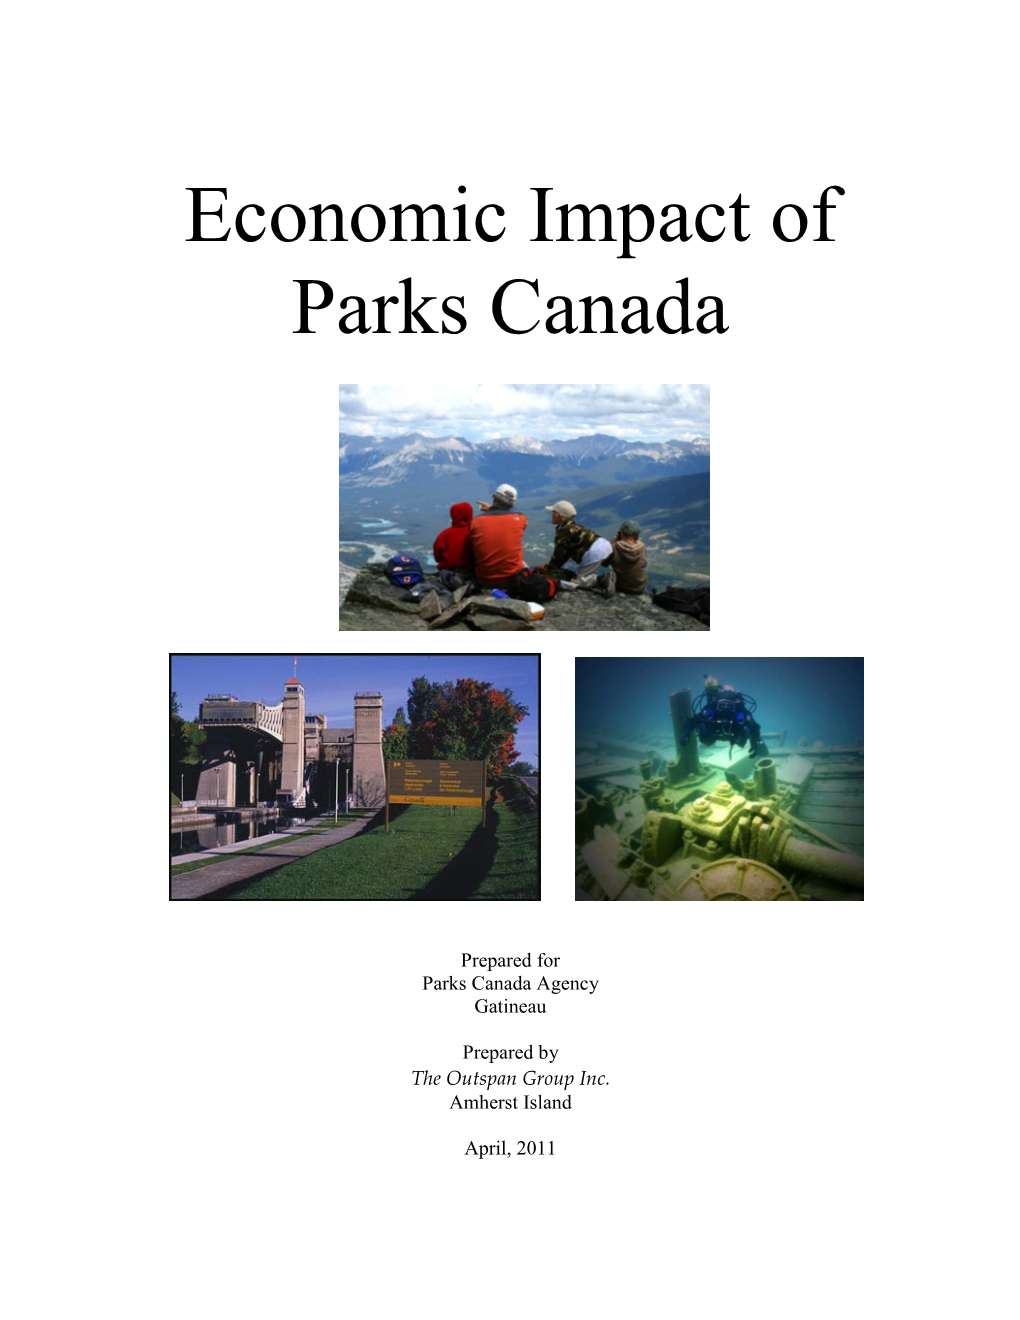 Economic Impact of Parks Canada